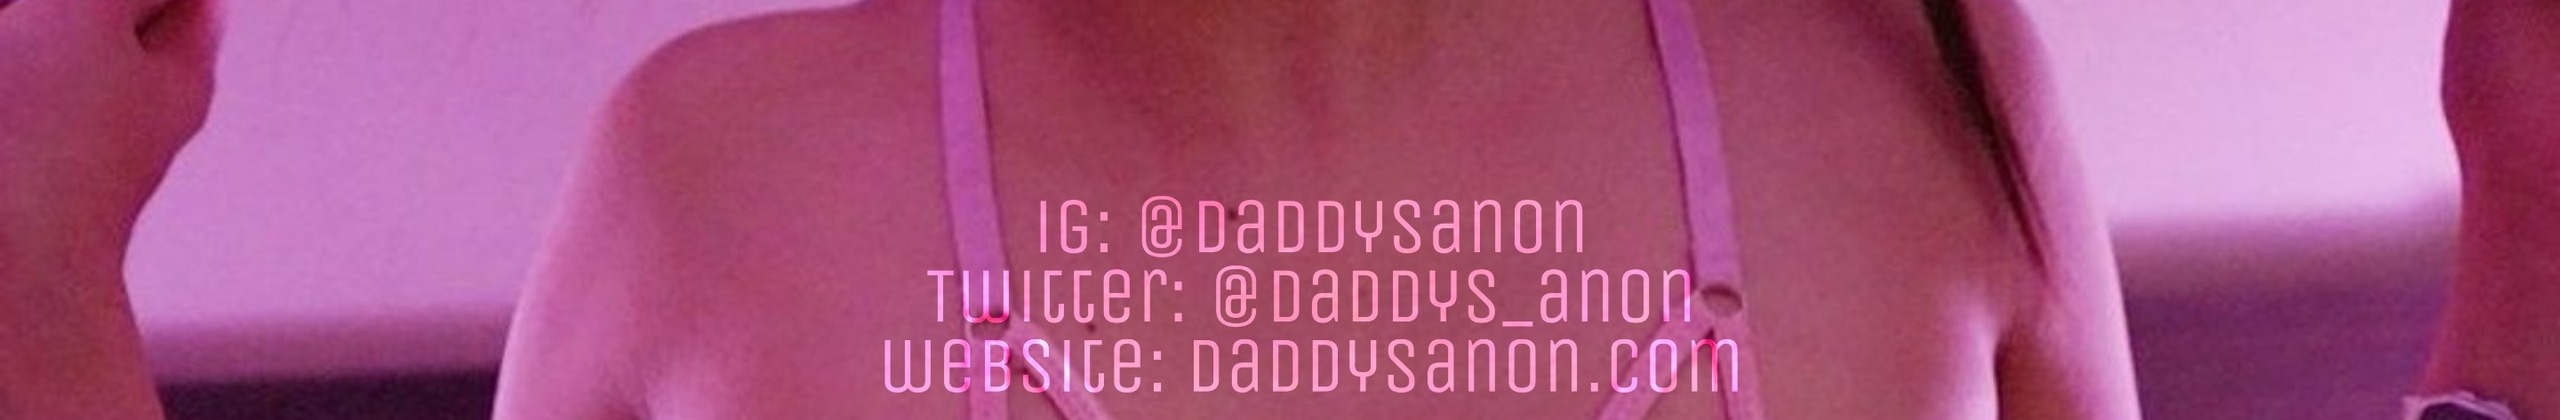 daddysanon - profile image